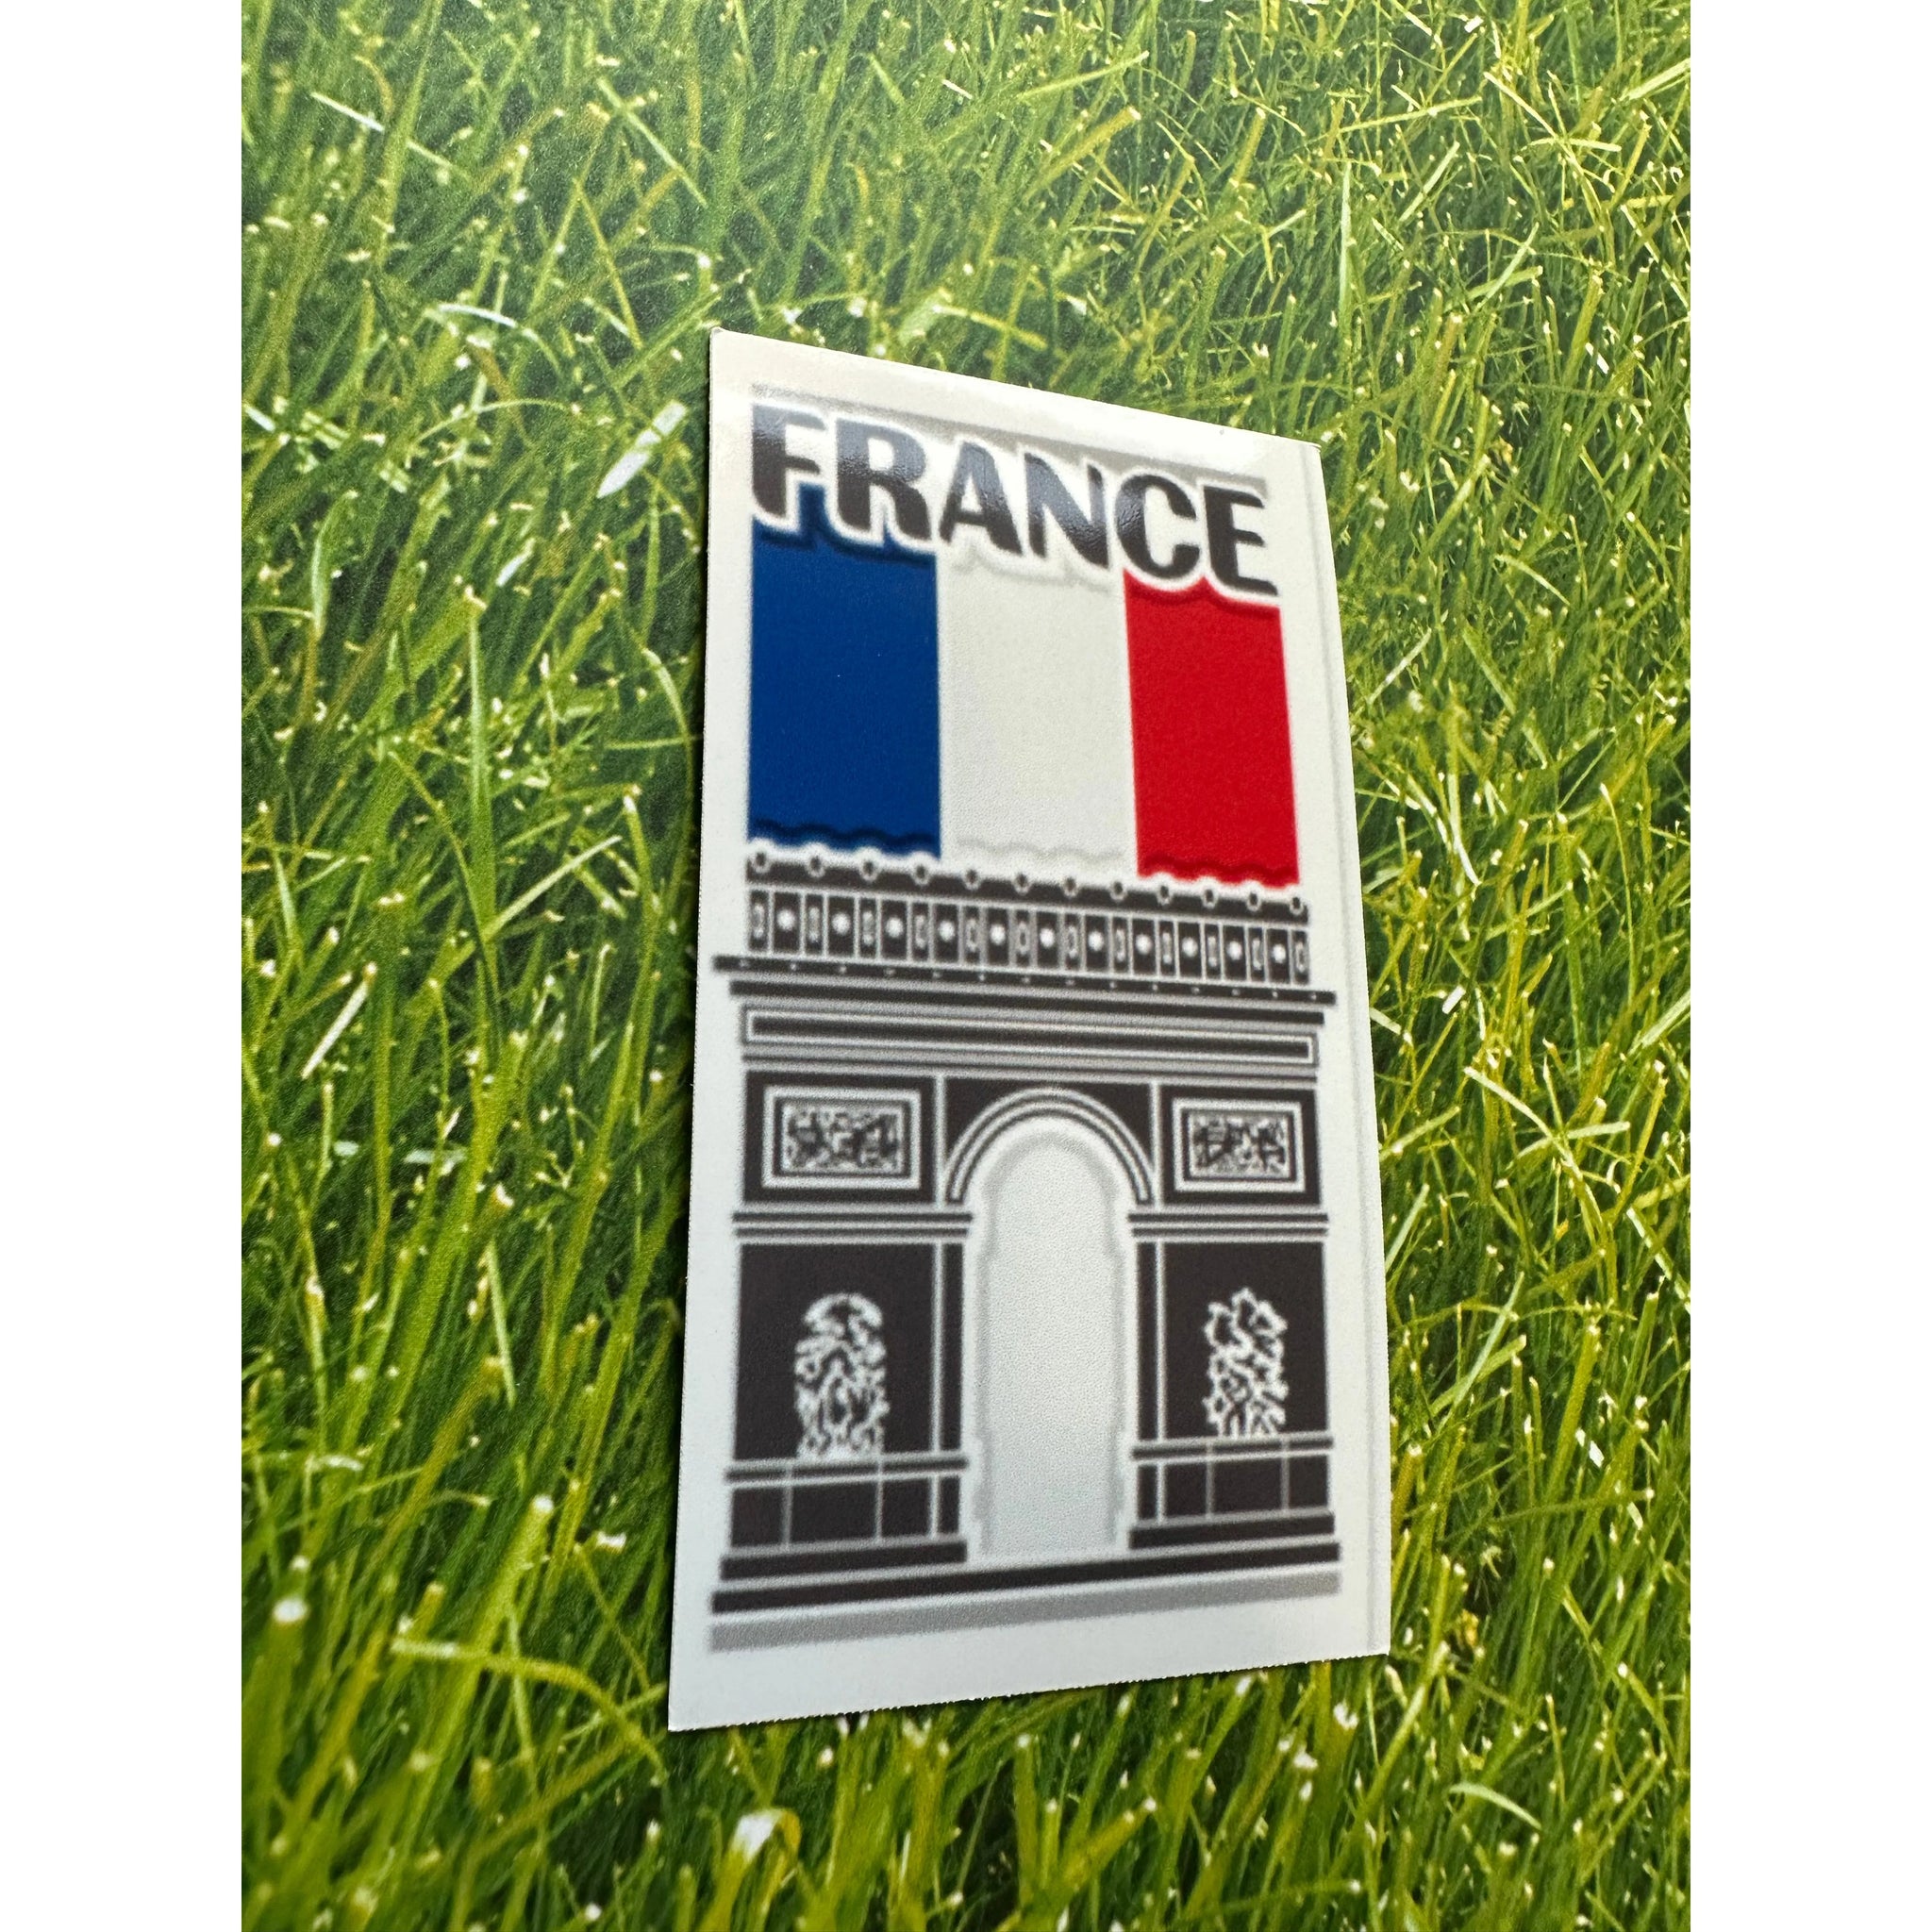 France Vinyl Decal Sticker